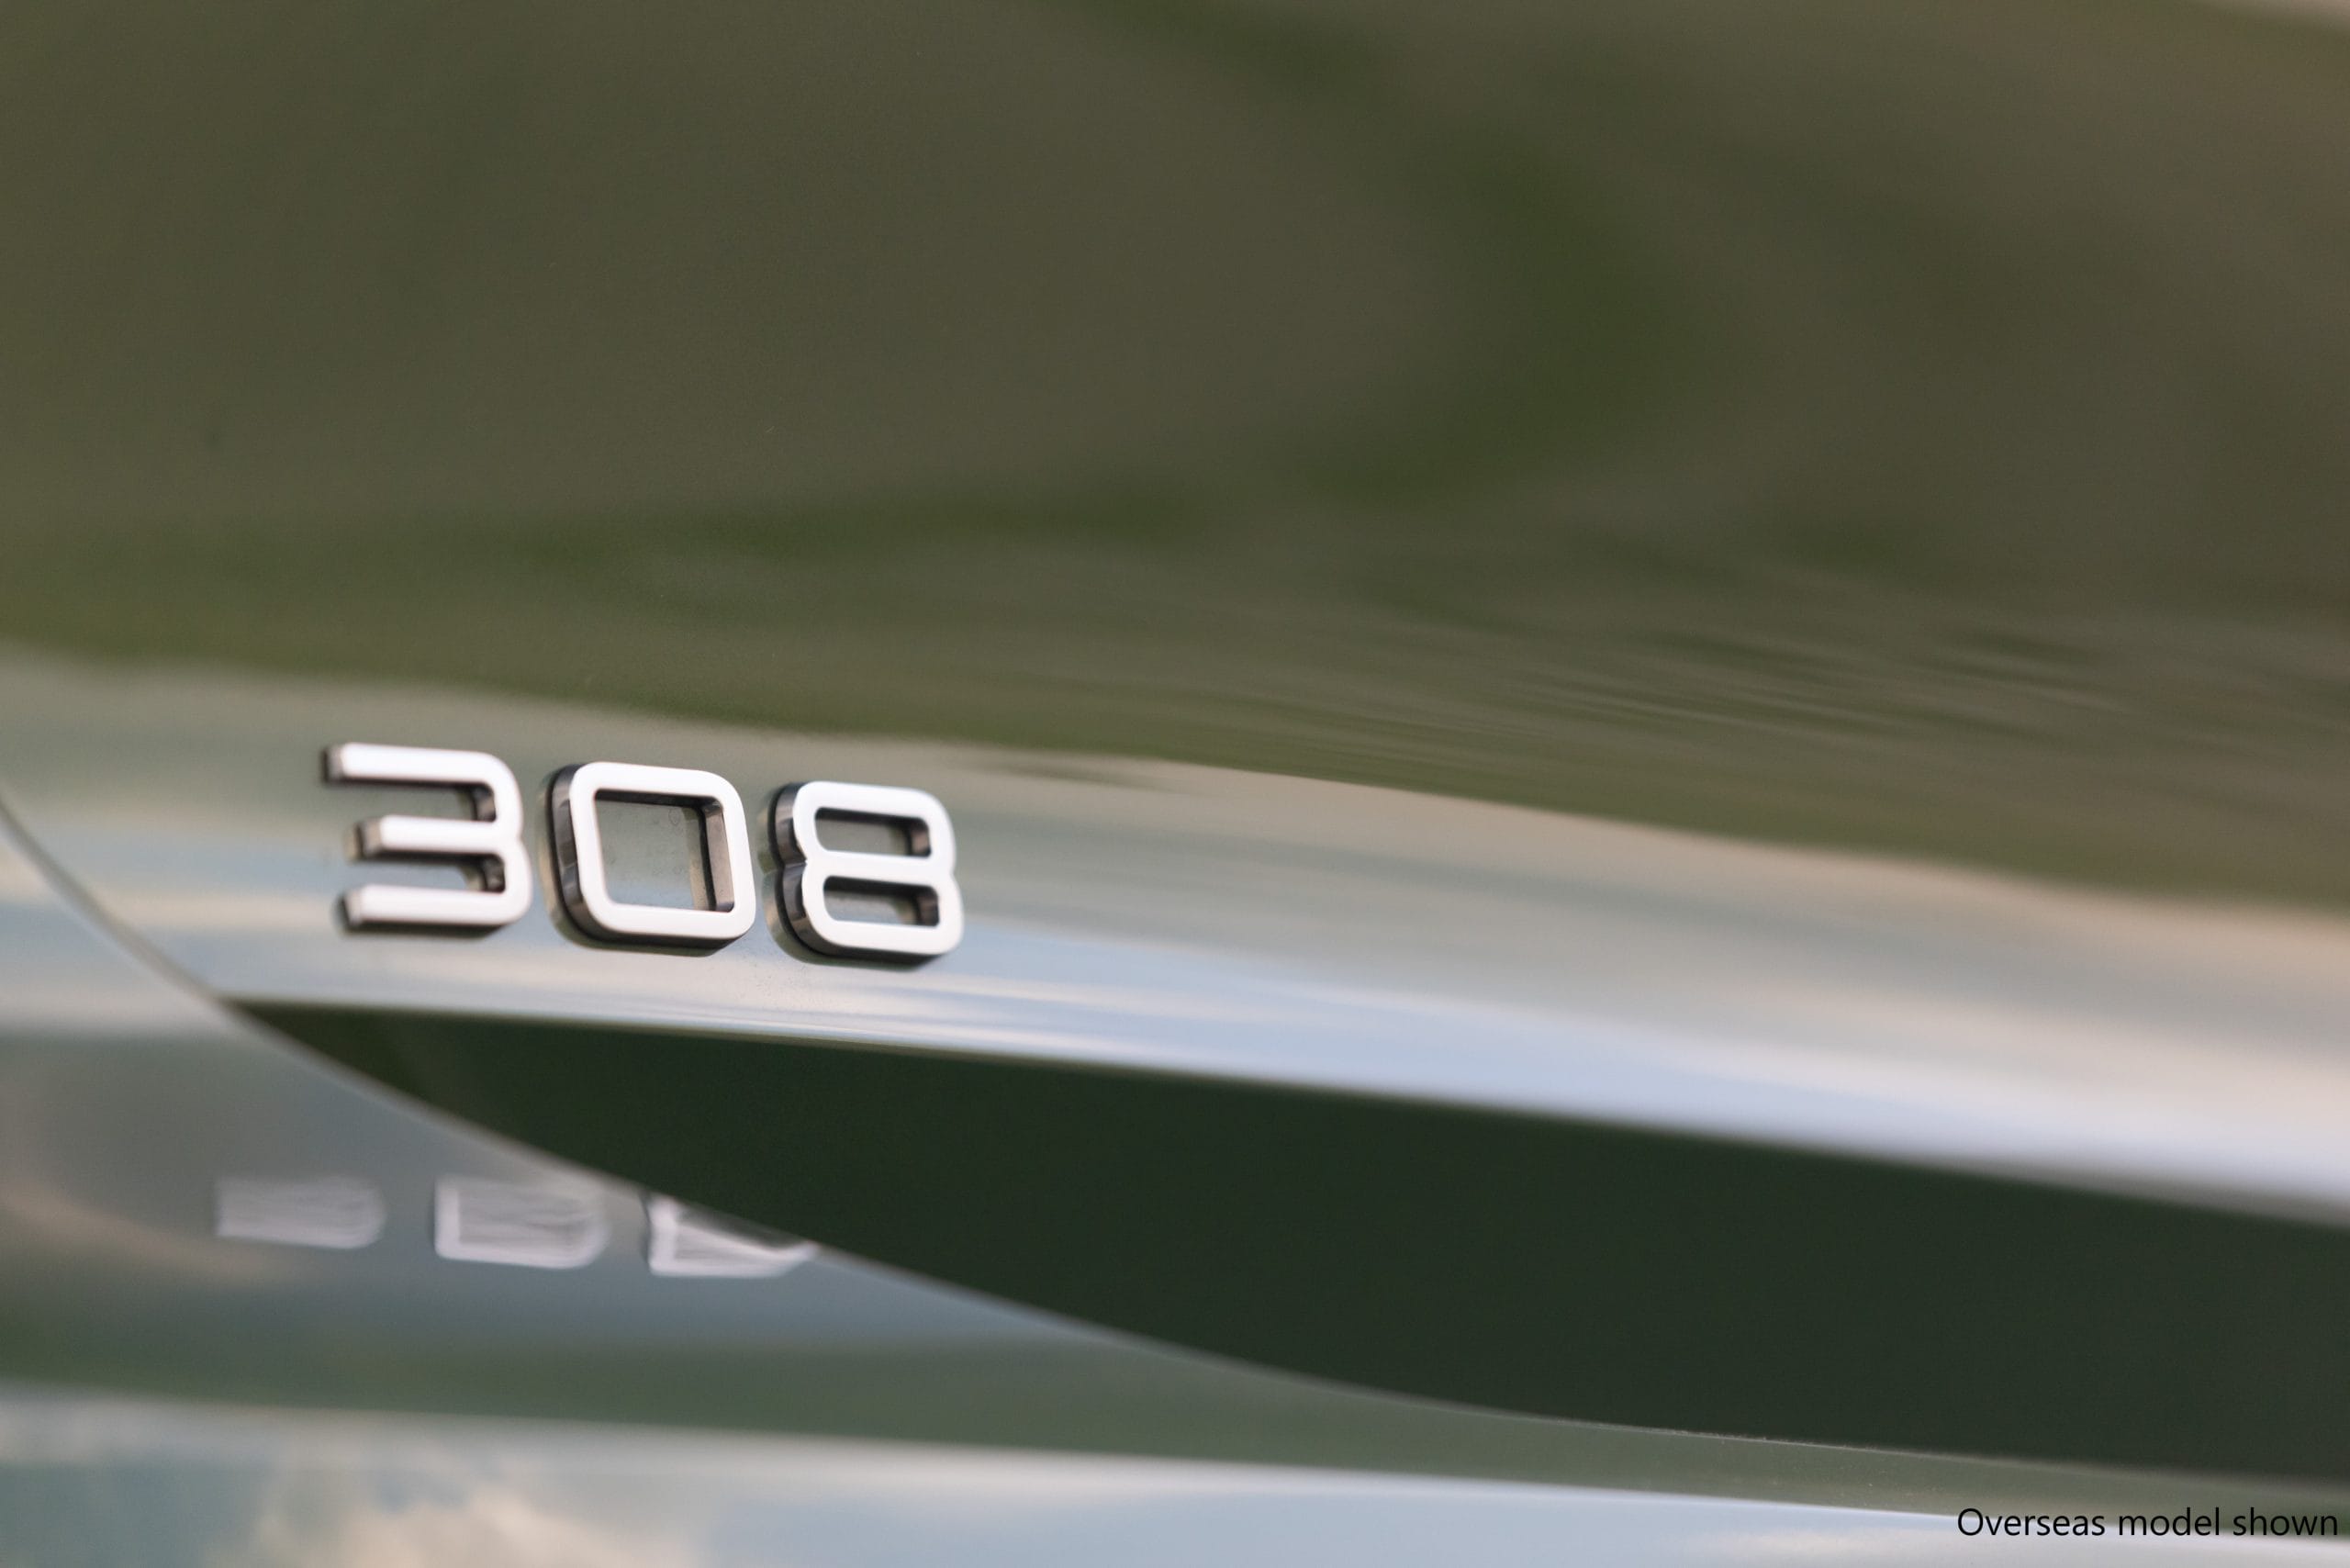 PEUGEOT 308 Hatch Overseas model shown.308 Hatch Overseas model shown.